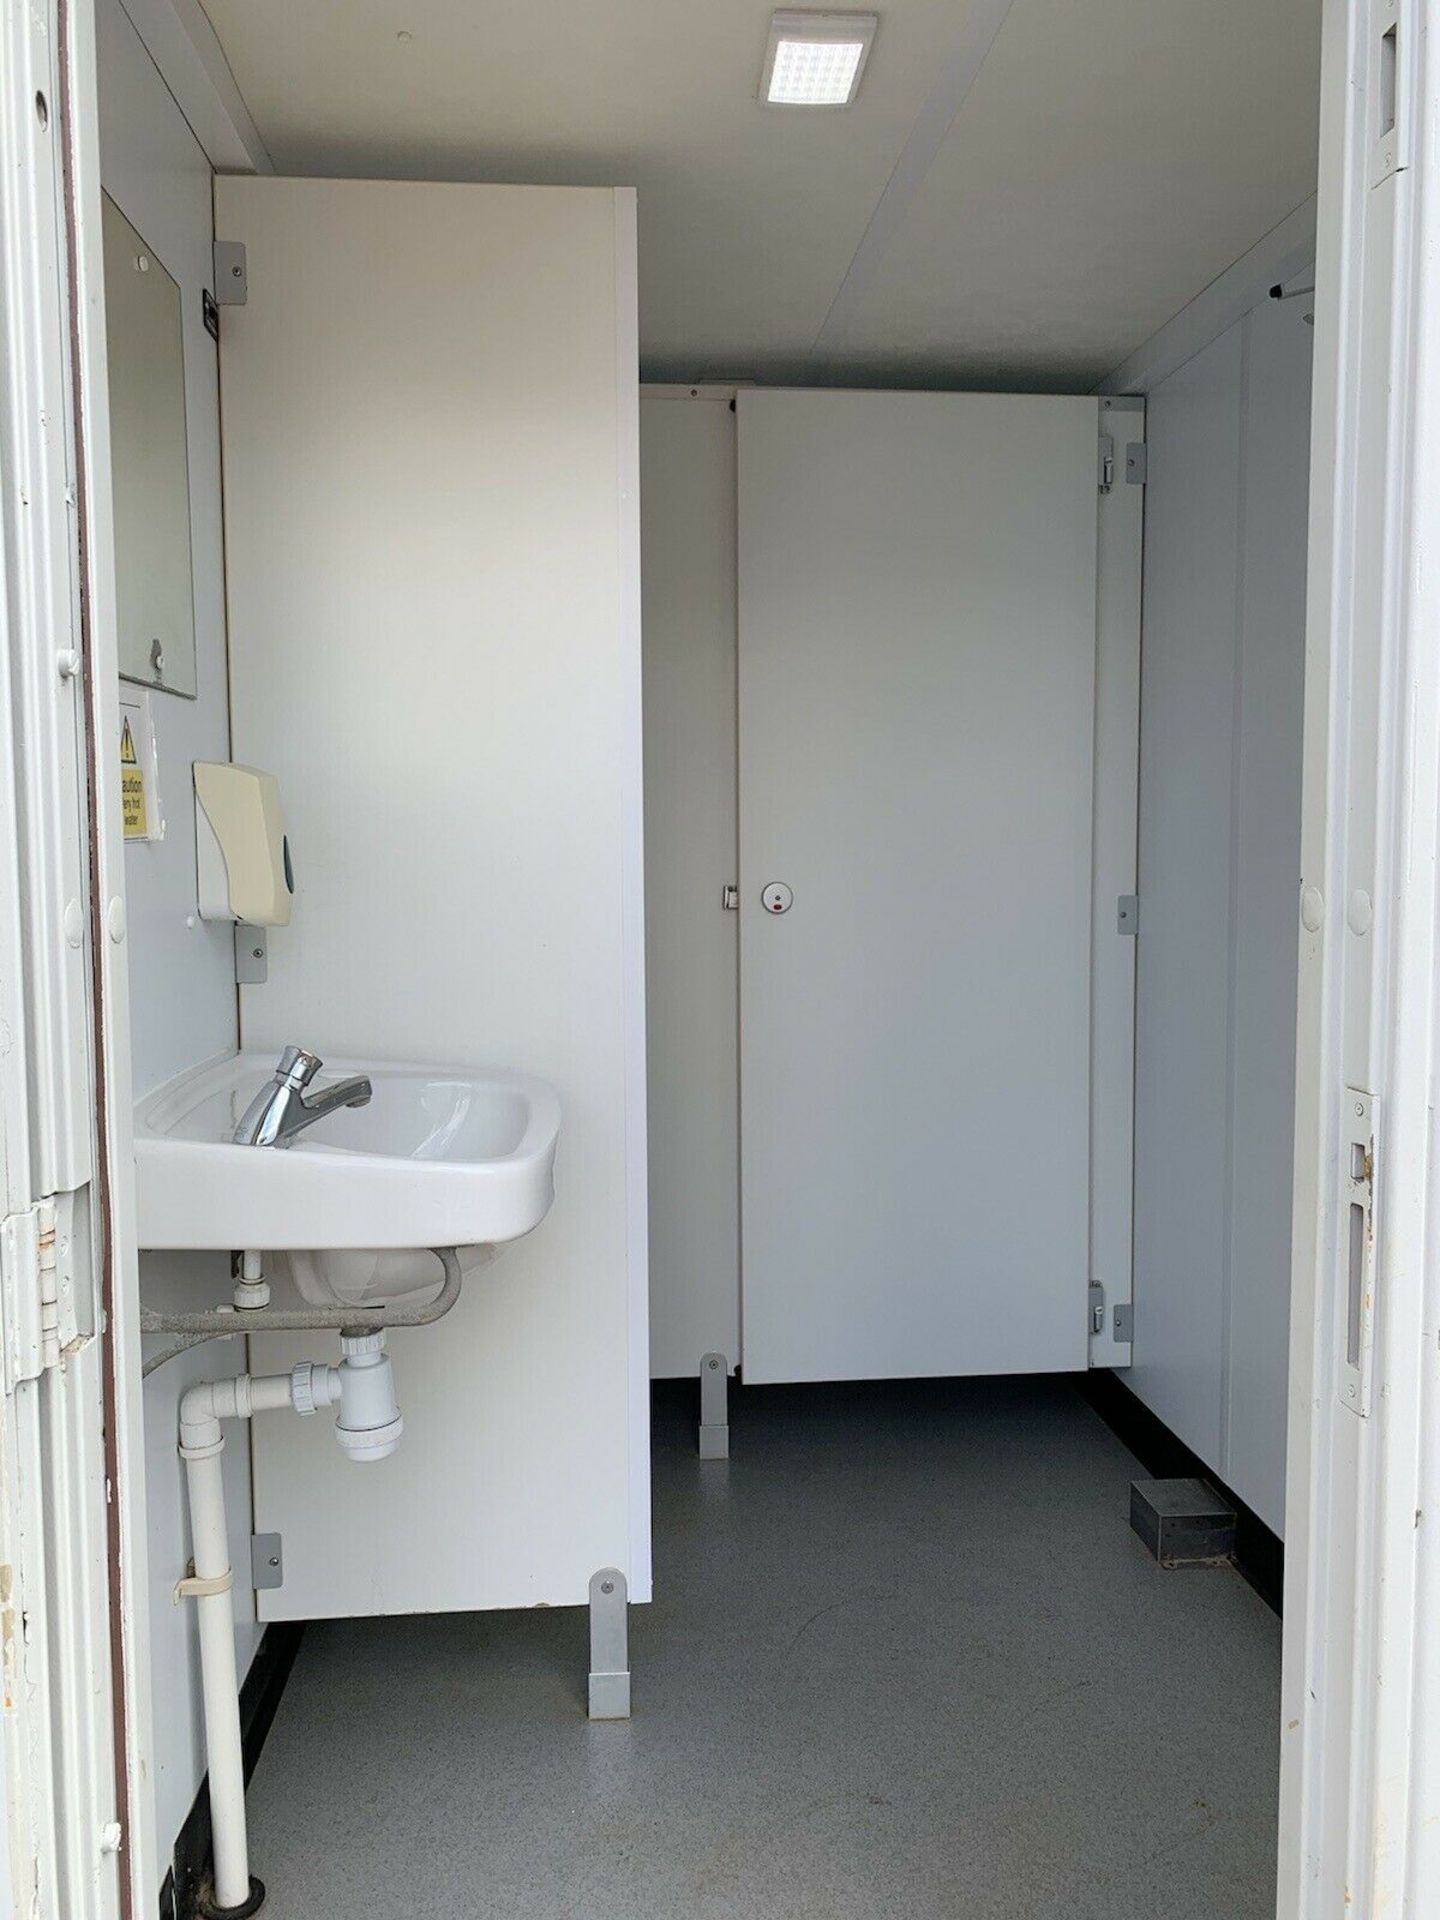 ECO Welfare Unit Site Cabin Canteen Generator Toilet Portable Anti Vandal Steel - Image 4 of 11